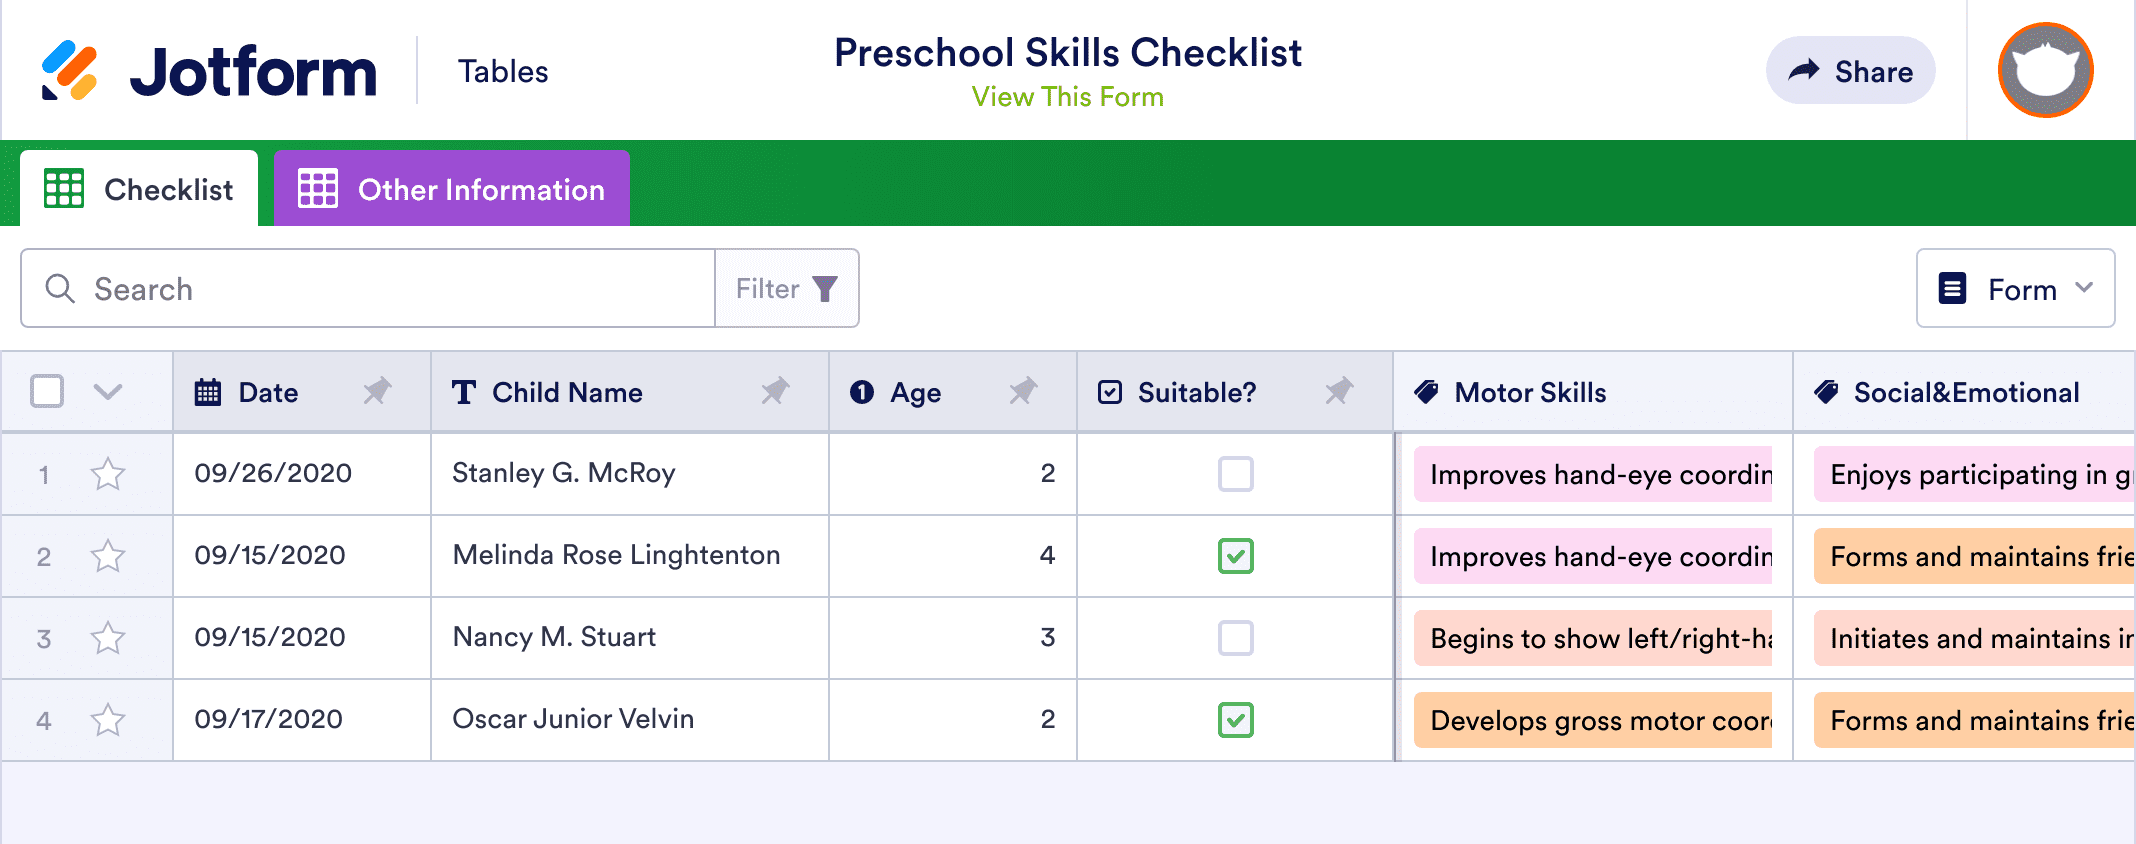 Preschool Skills Checklist